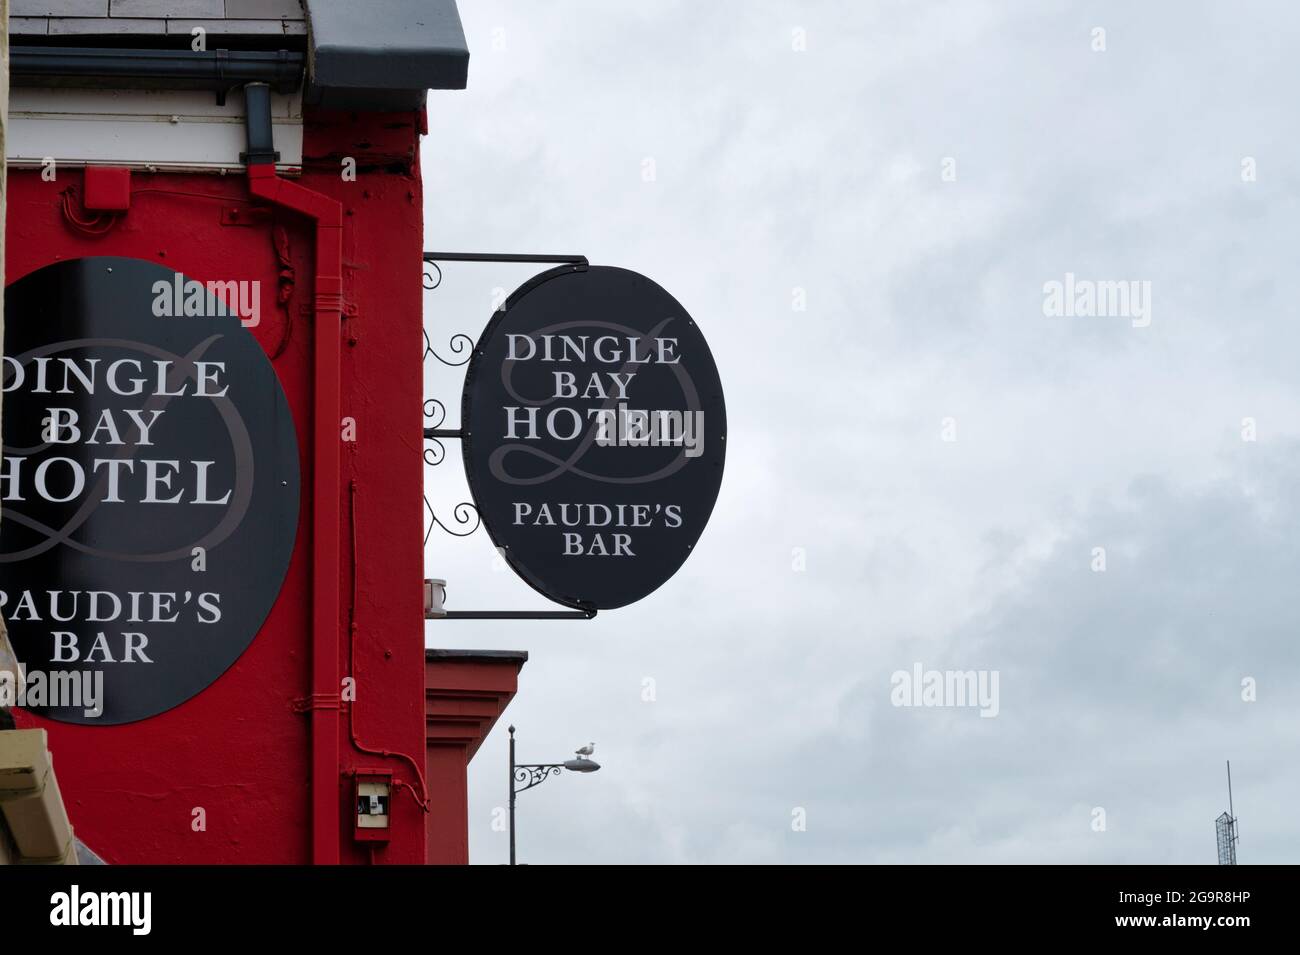 Dingle, Ireland- July 8, 2021: The sign for Dingle Bay Hotel in Ireland Stock Photo